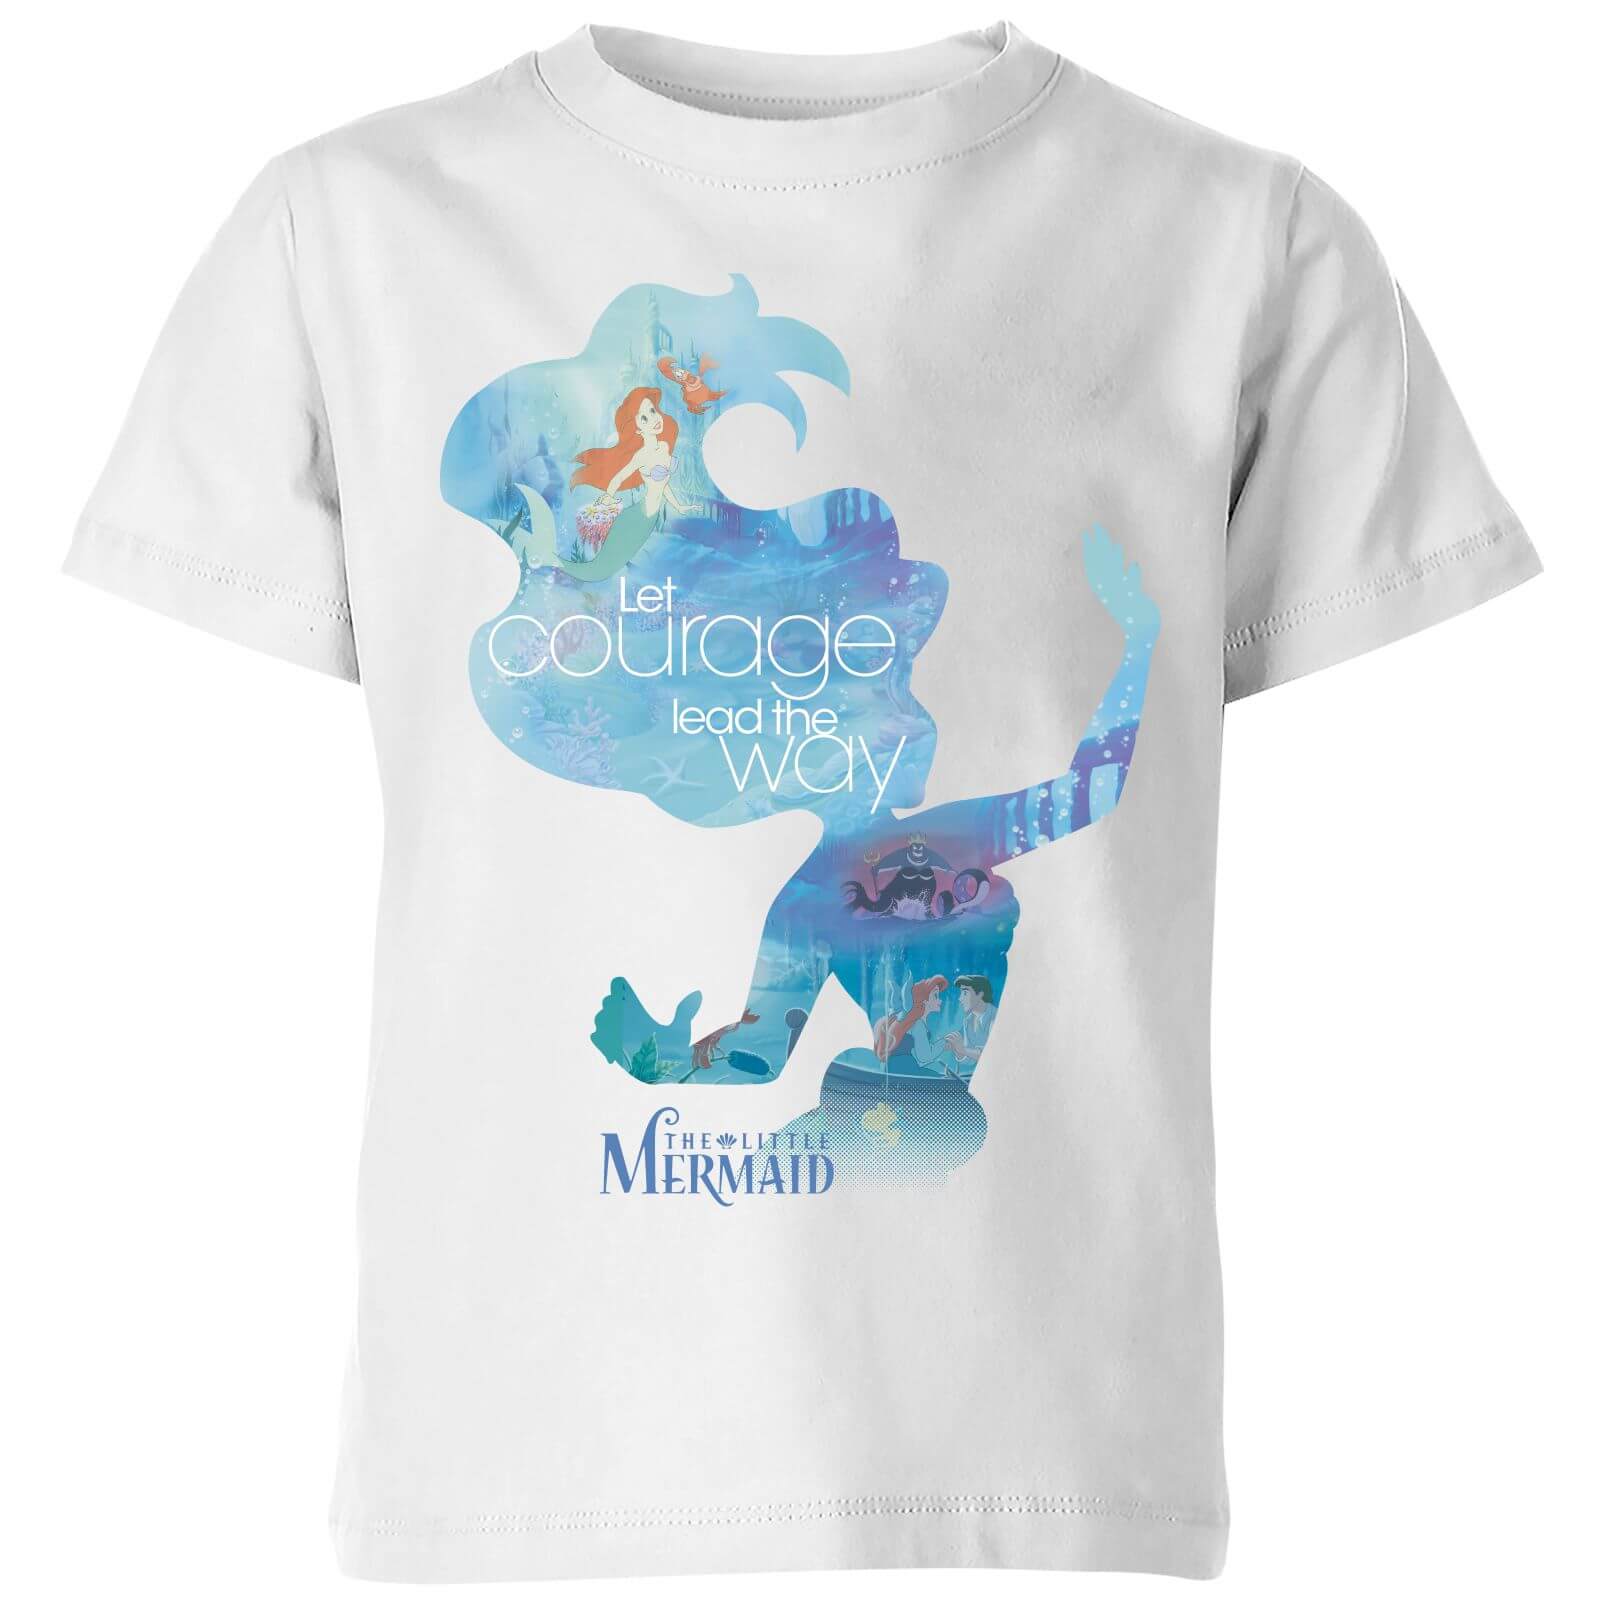 Disney Princess Filled Silhouette Ariel Kids' T-Shirt - White - 3-4 Years